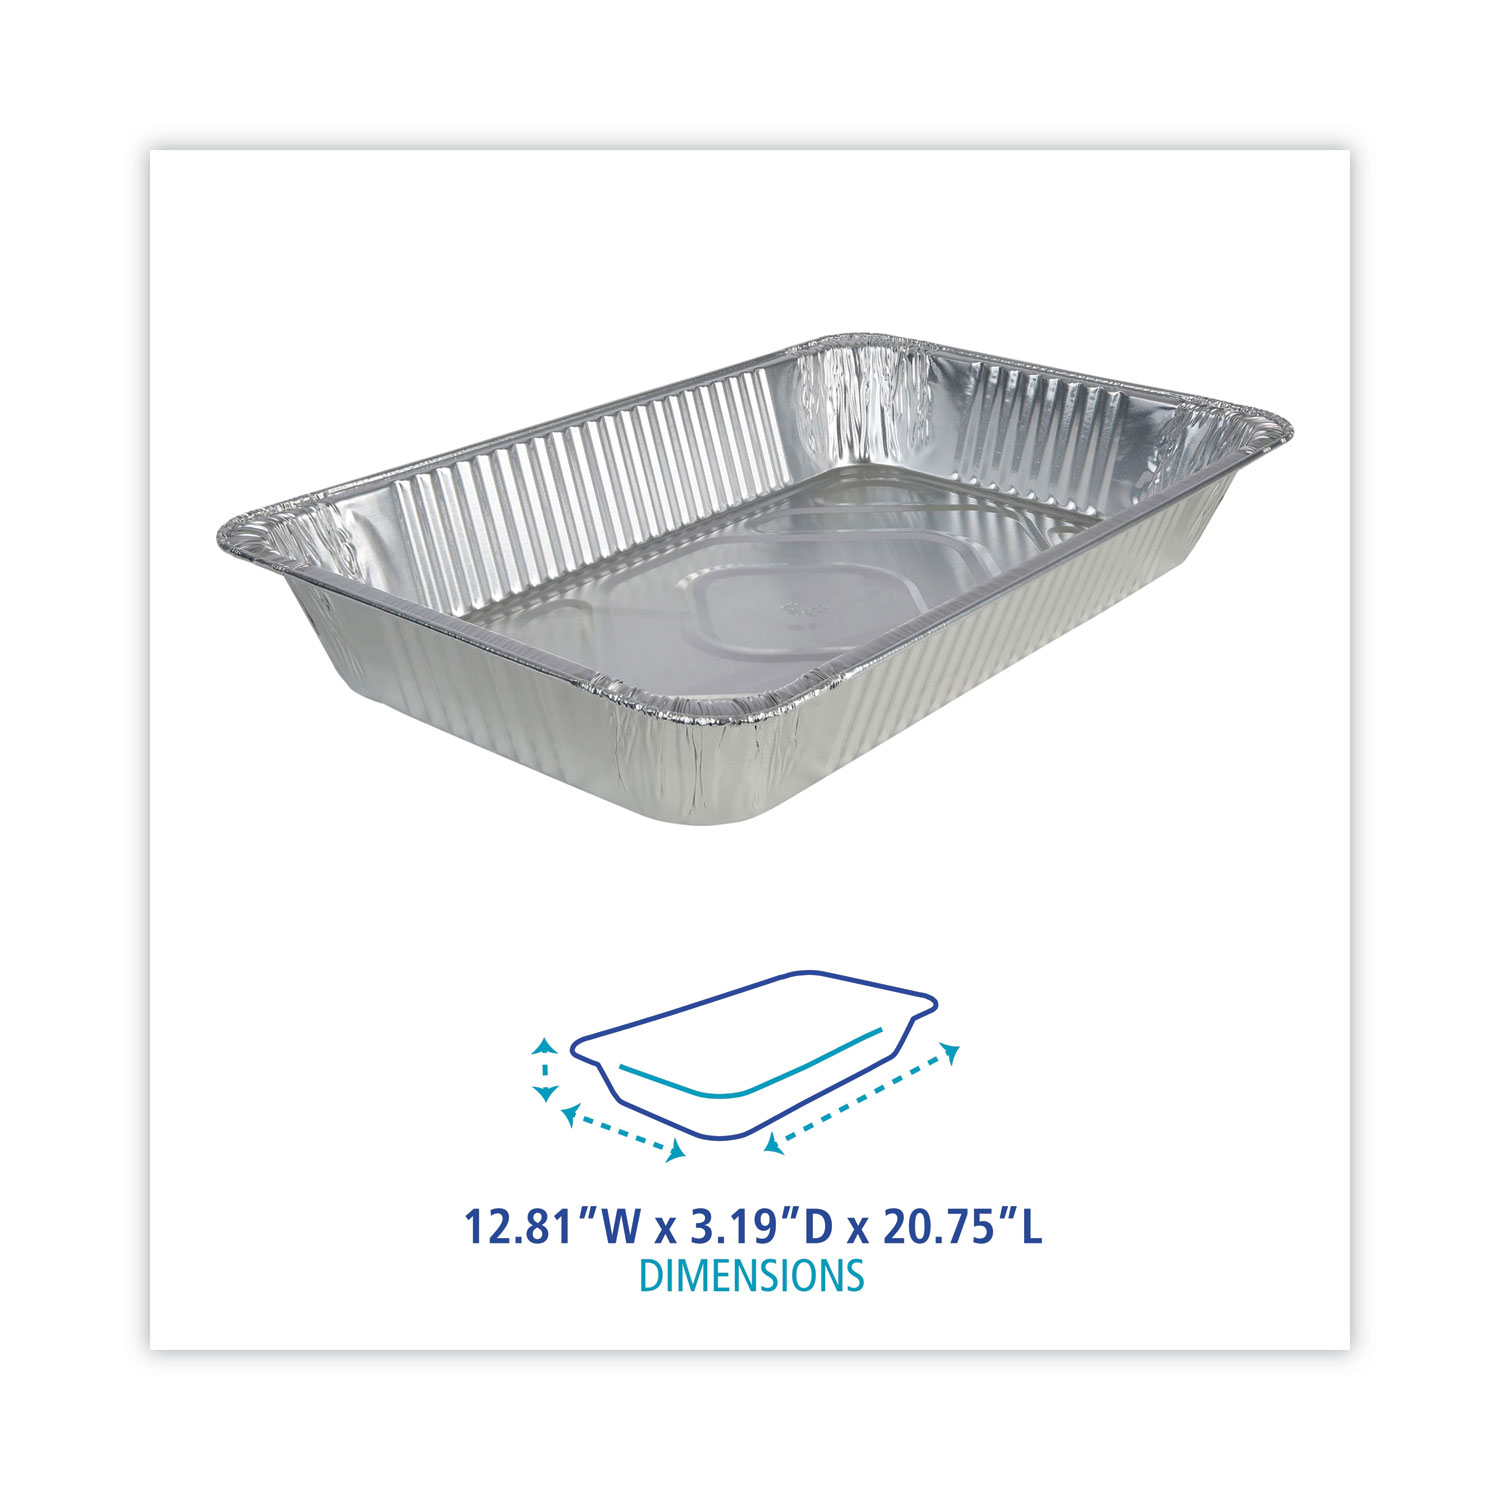 Eco-Foil Aluminum Deep Steam Table Pan, Full Size, 15 ct